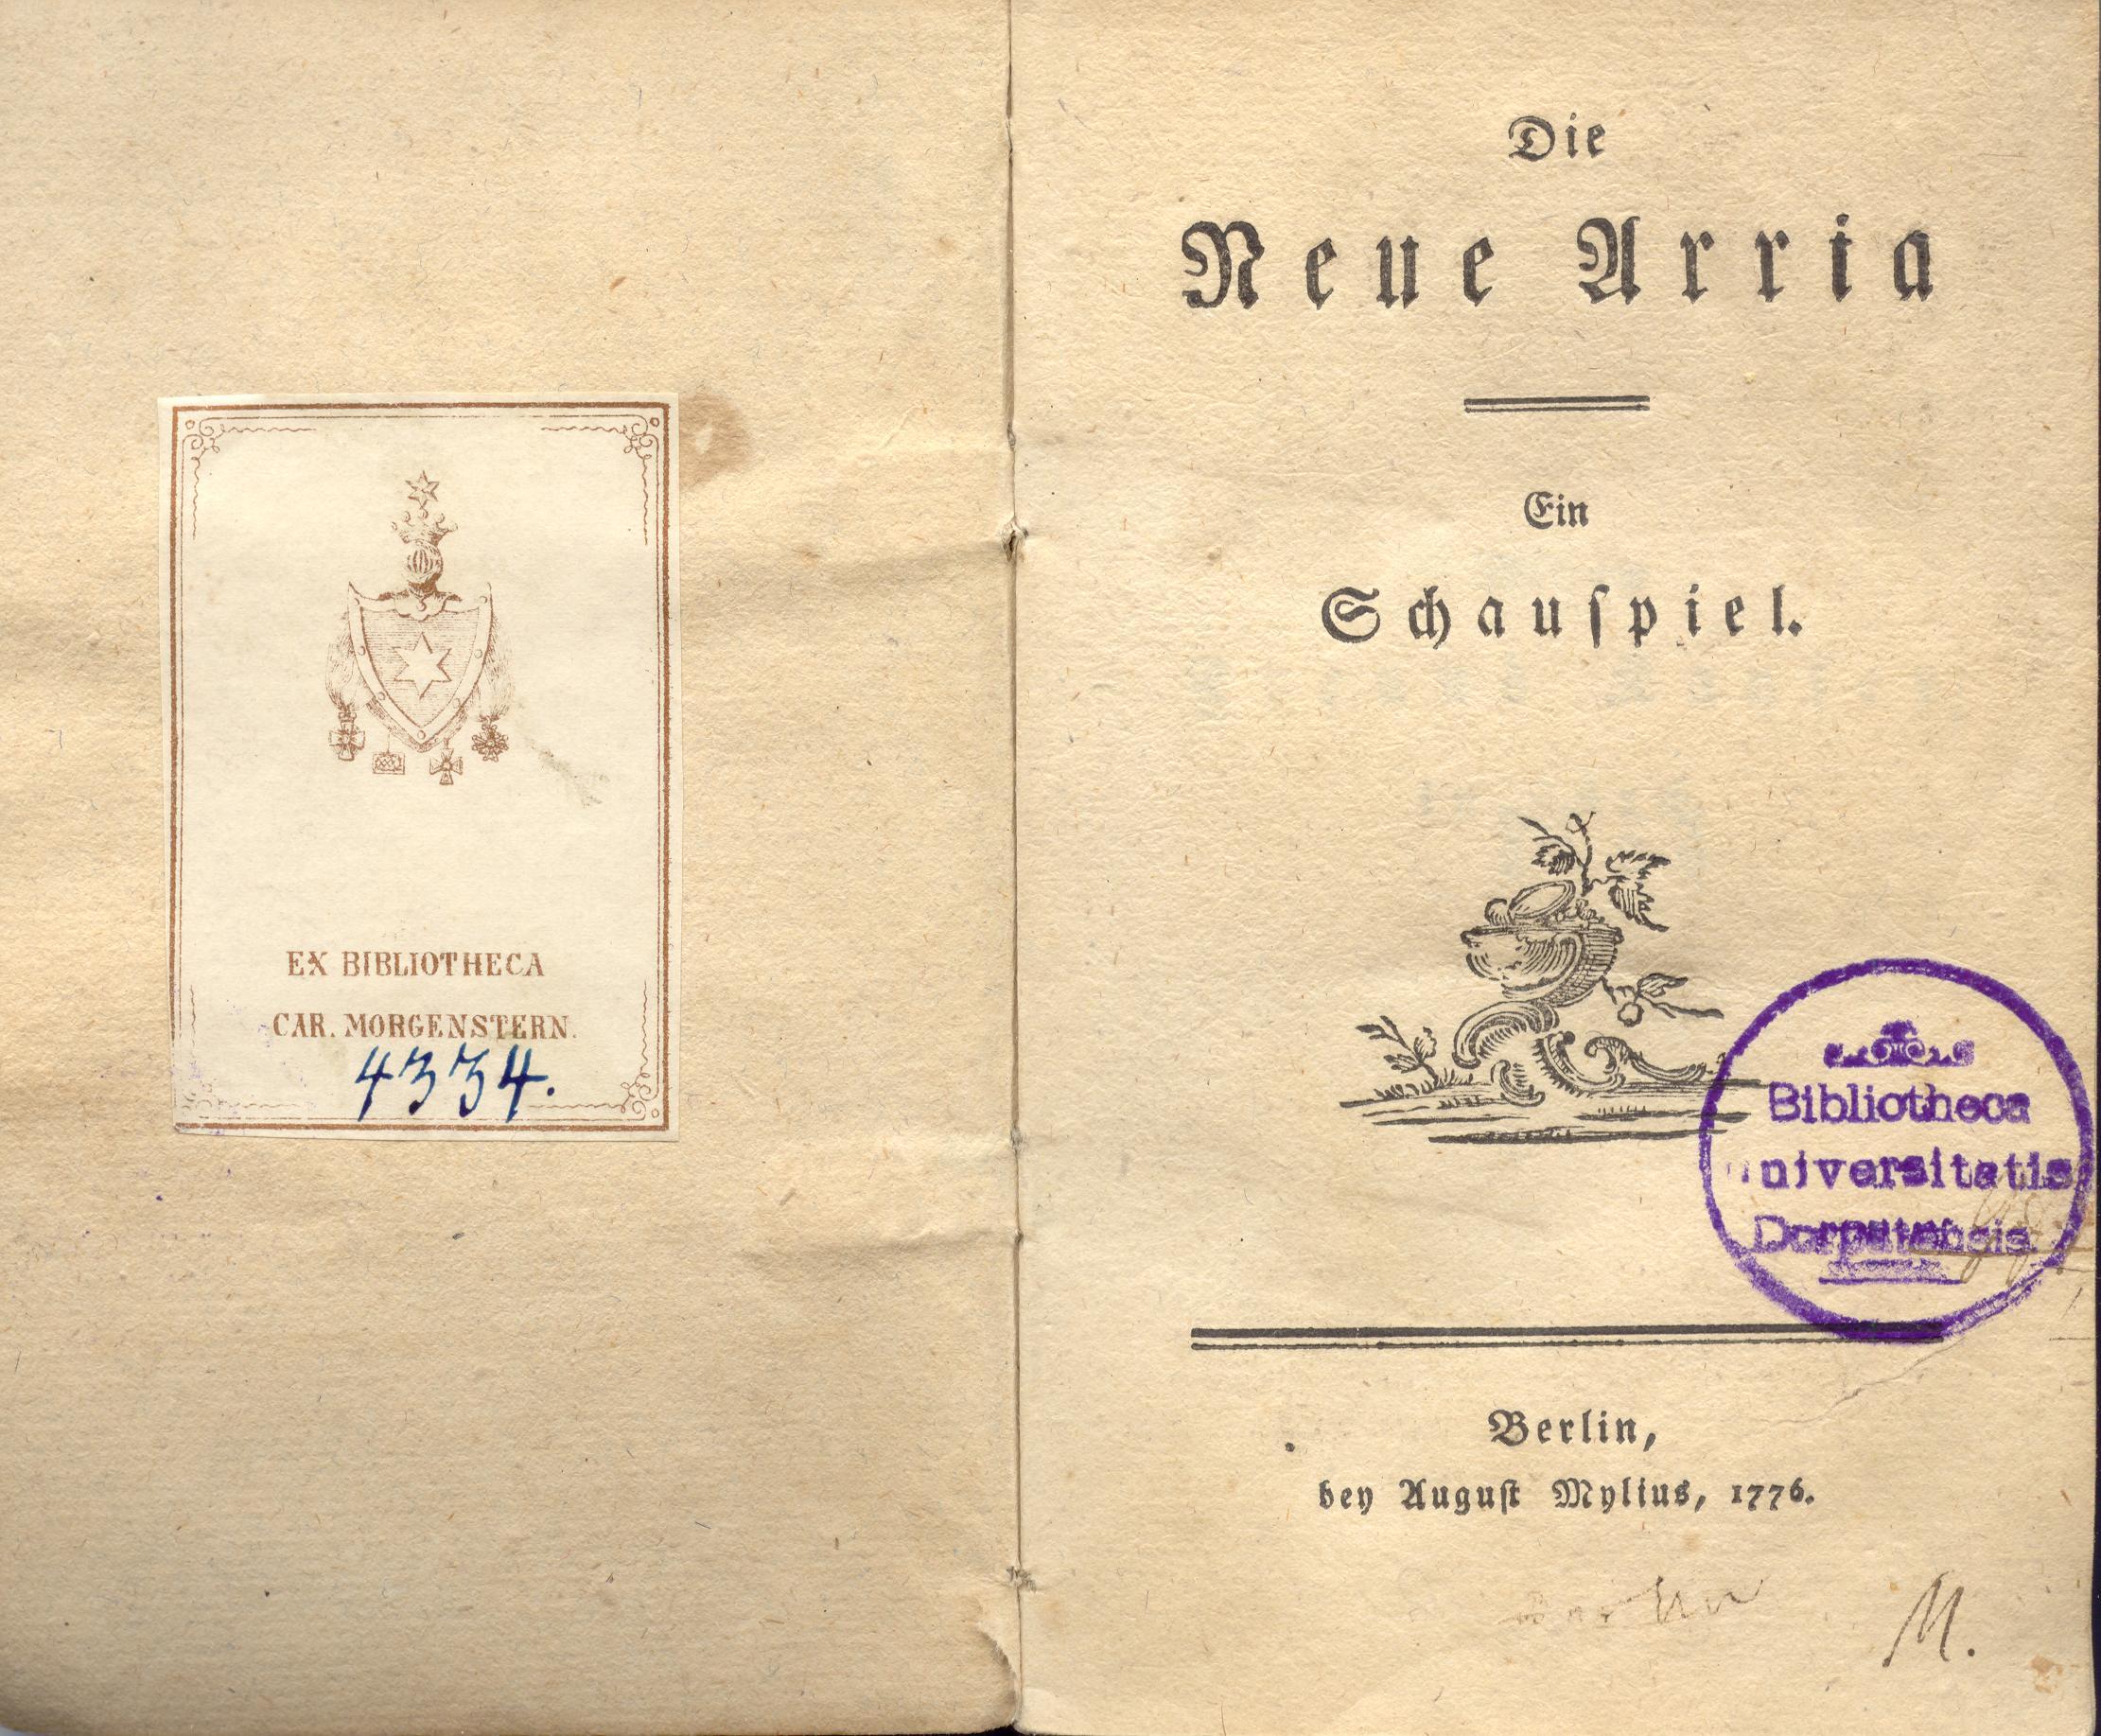 Die neue Arria (1776) | 1. Title page